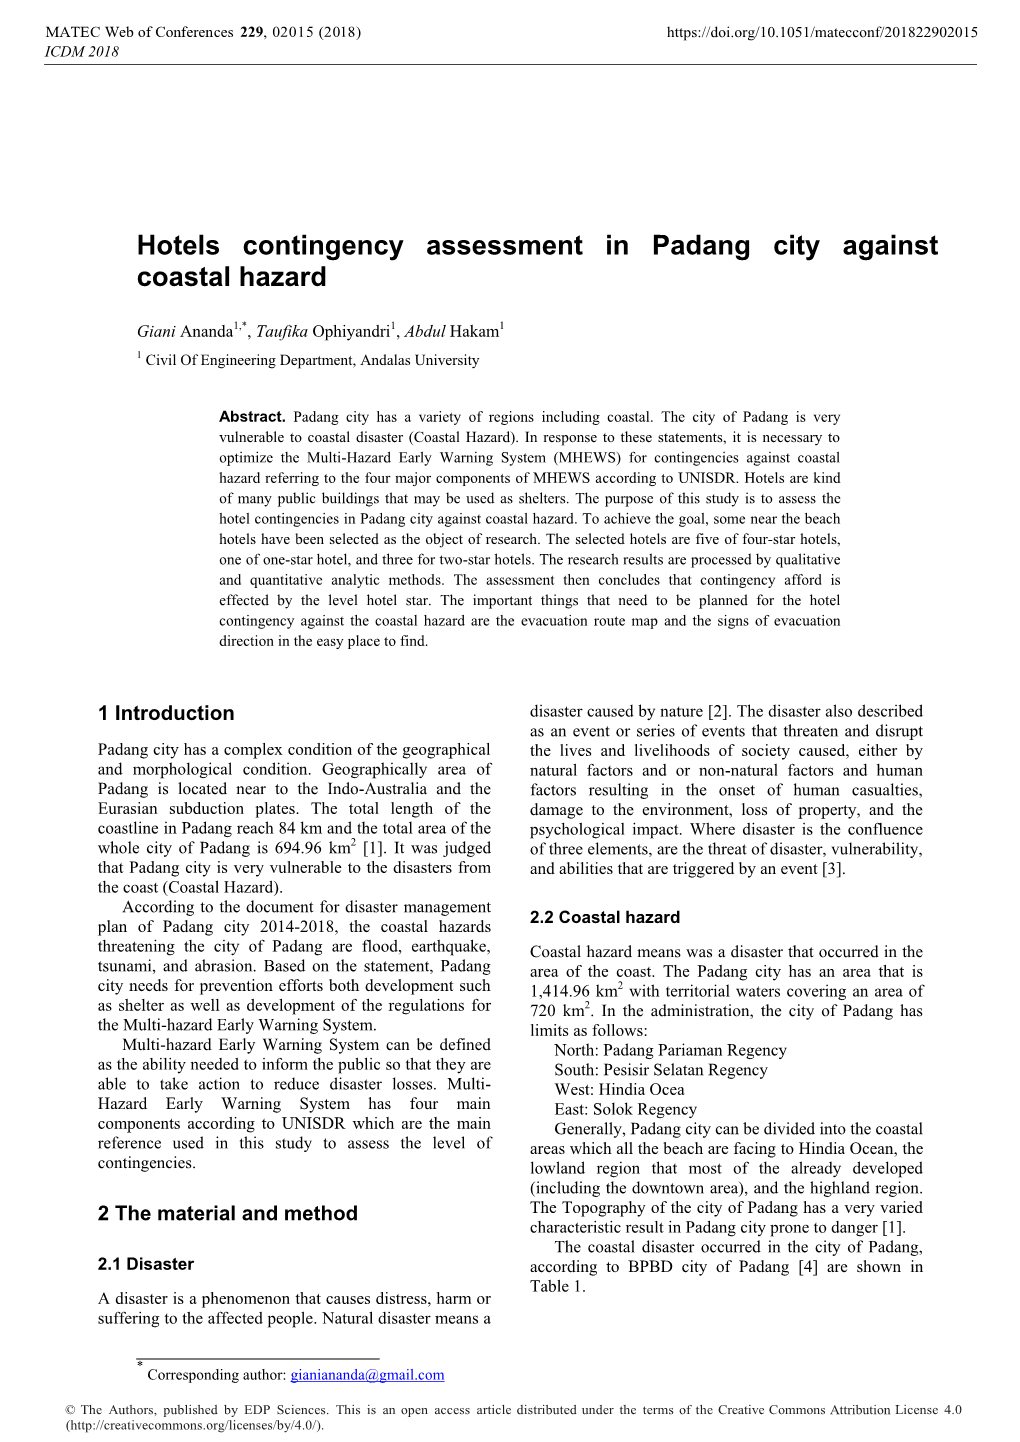 Hotels Contingency Assessment in Padang City Against Coastal Hazard